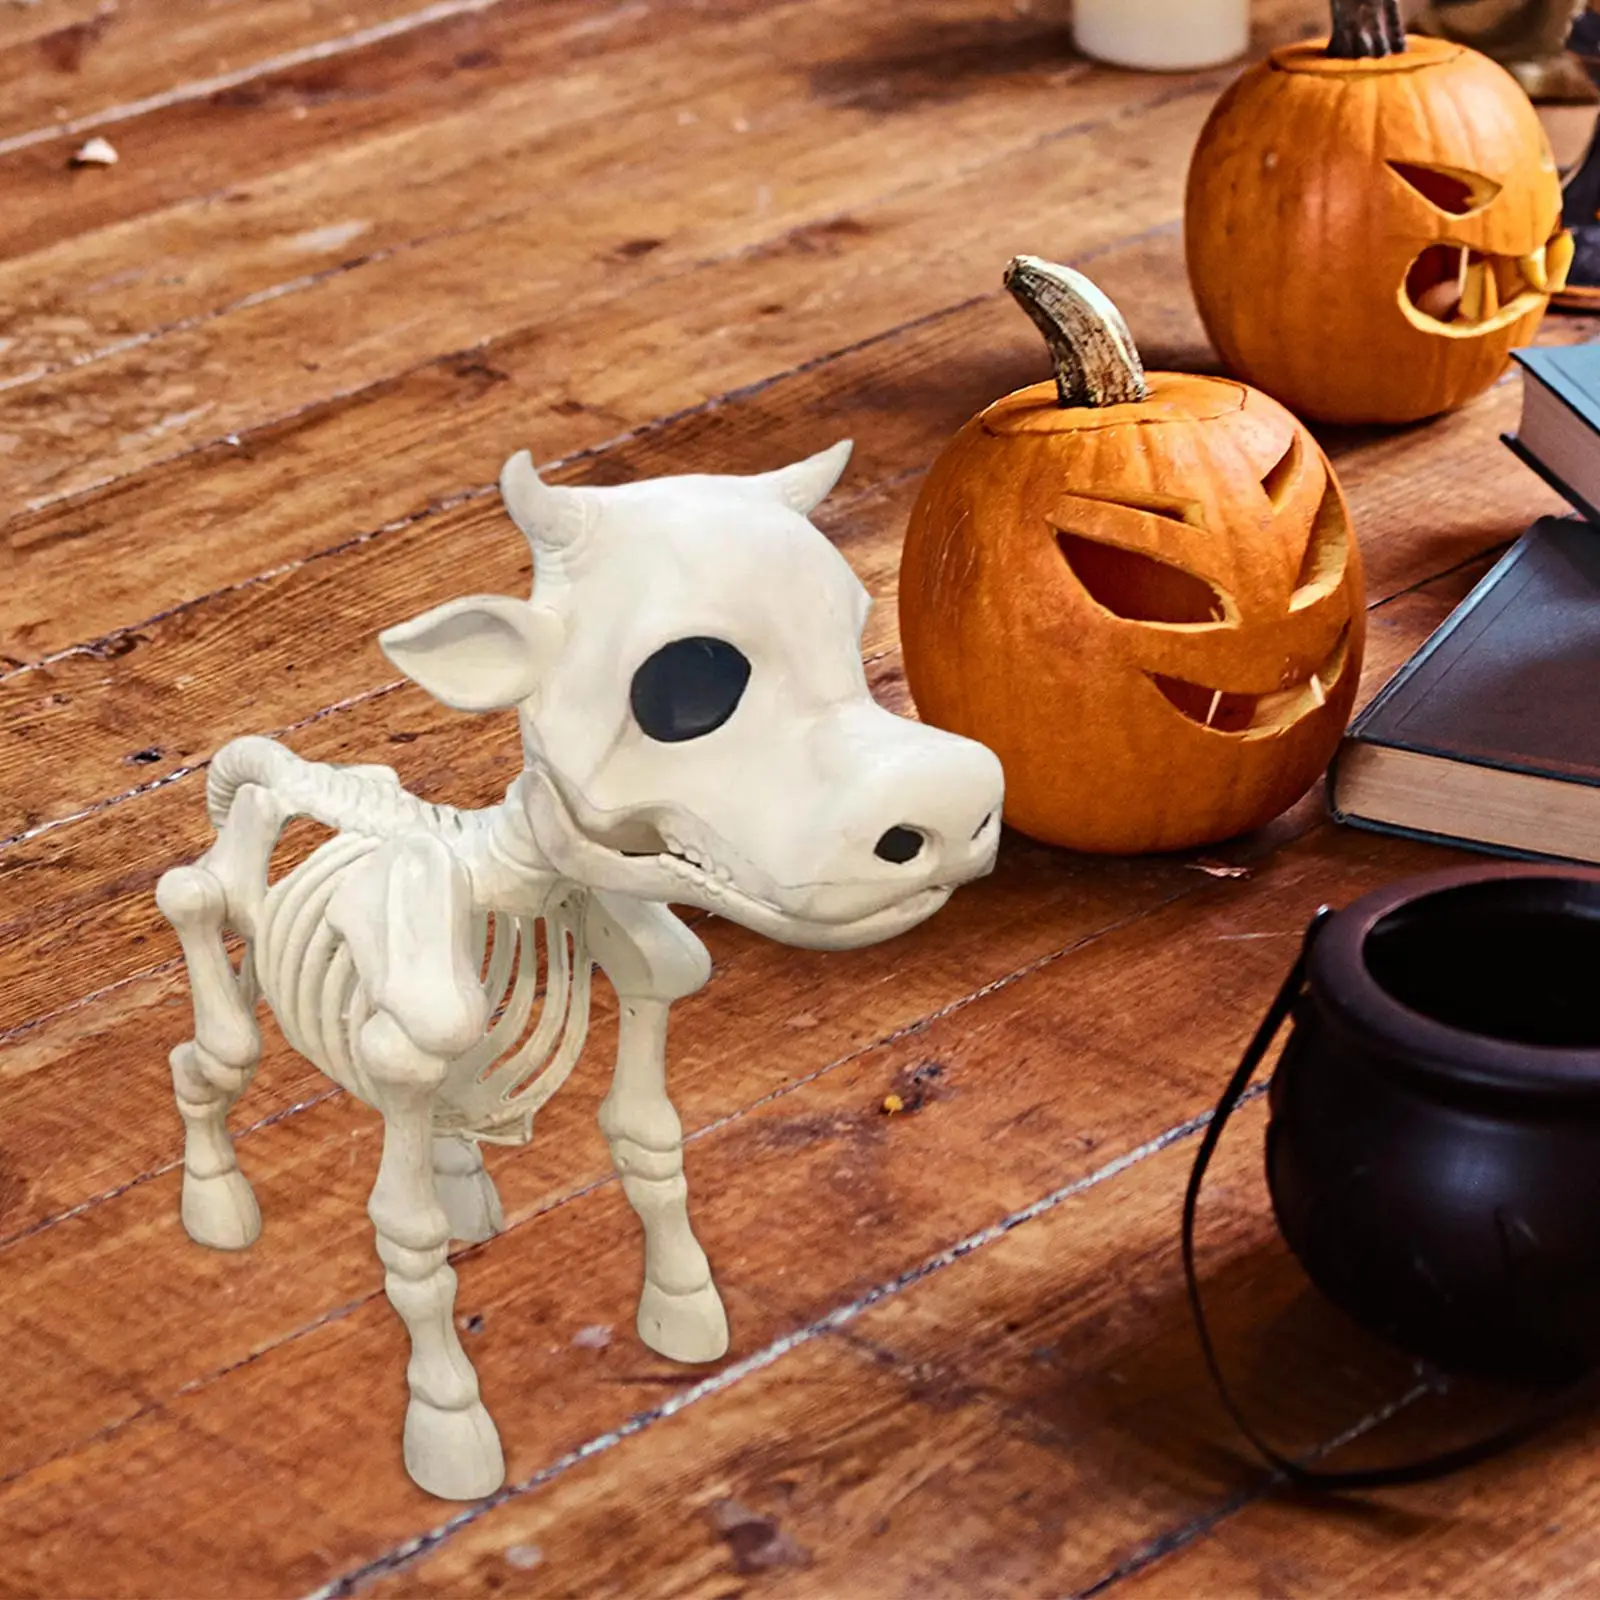 Cow Skeleton Halloween Decoration Novelty Gifts Collectible Garden Sculpture